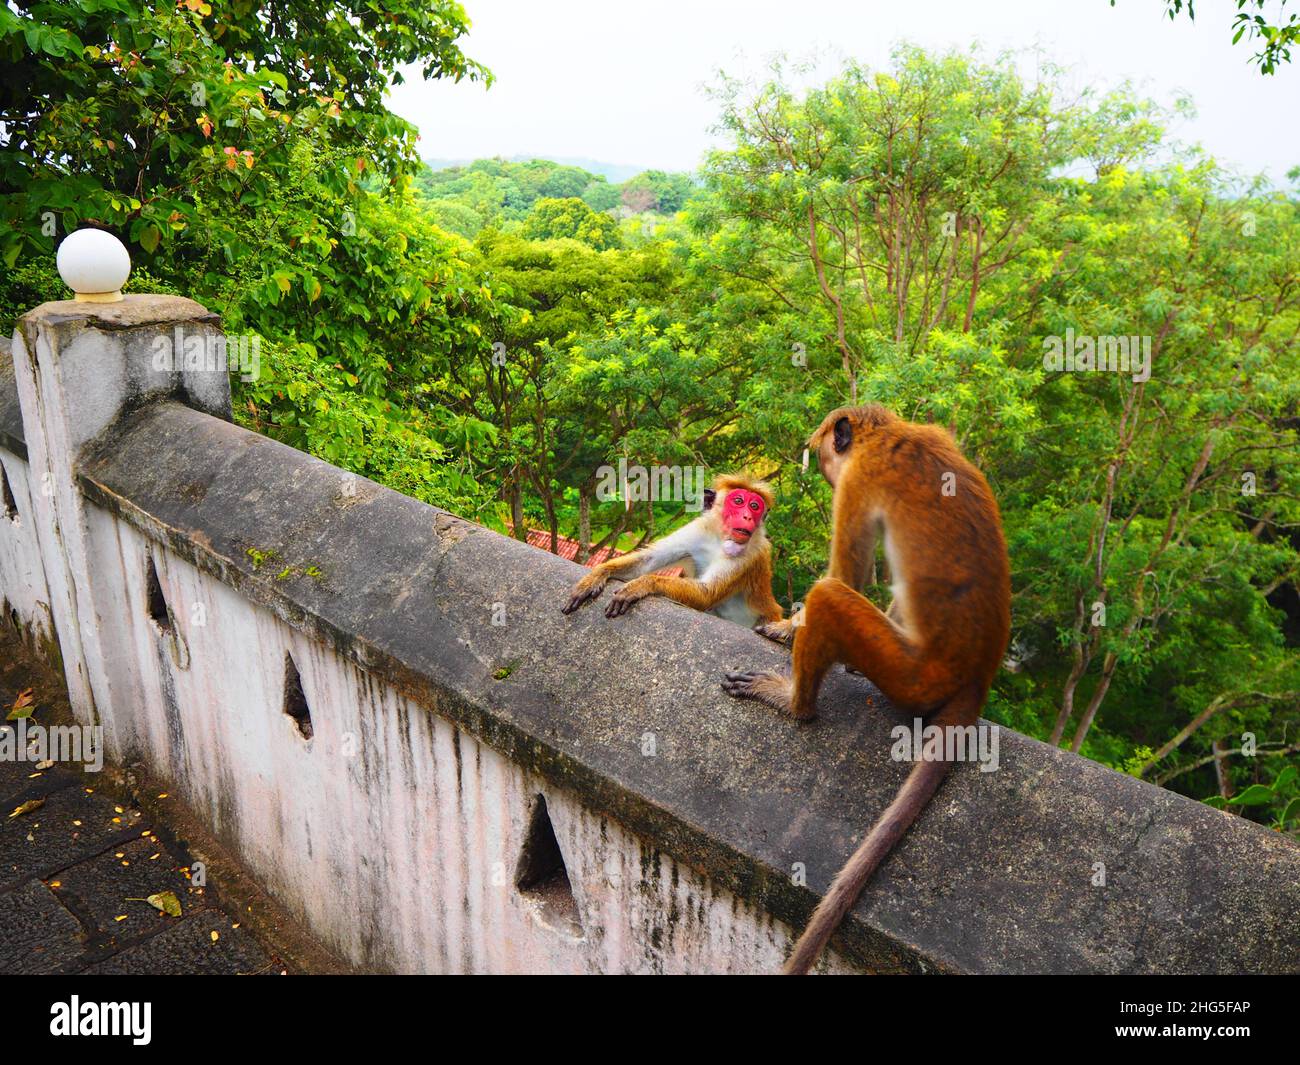 Mokeys in a Temple, Travel again Südostasien #Asien #authentisch #fernweh #slowtravel #stayinspired #DreamNowVisitLater #TravelAgain #Corona Stockfoto